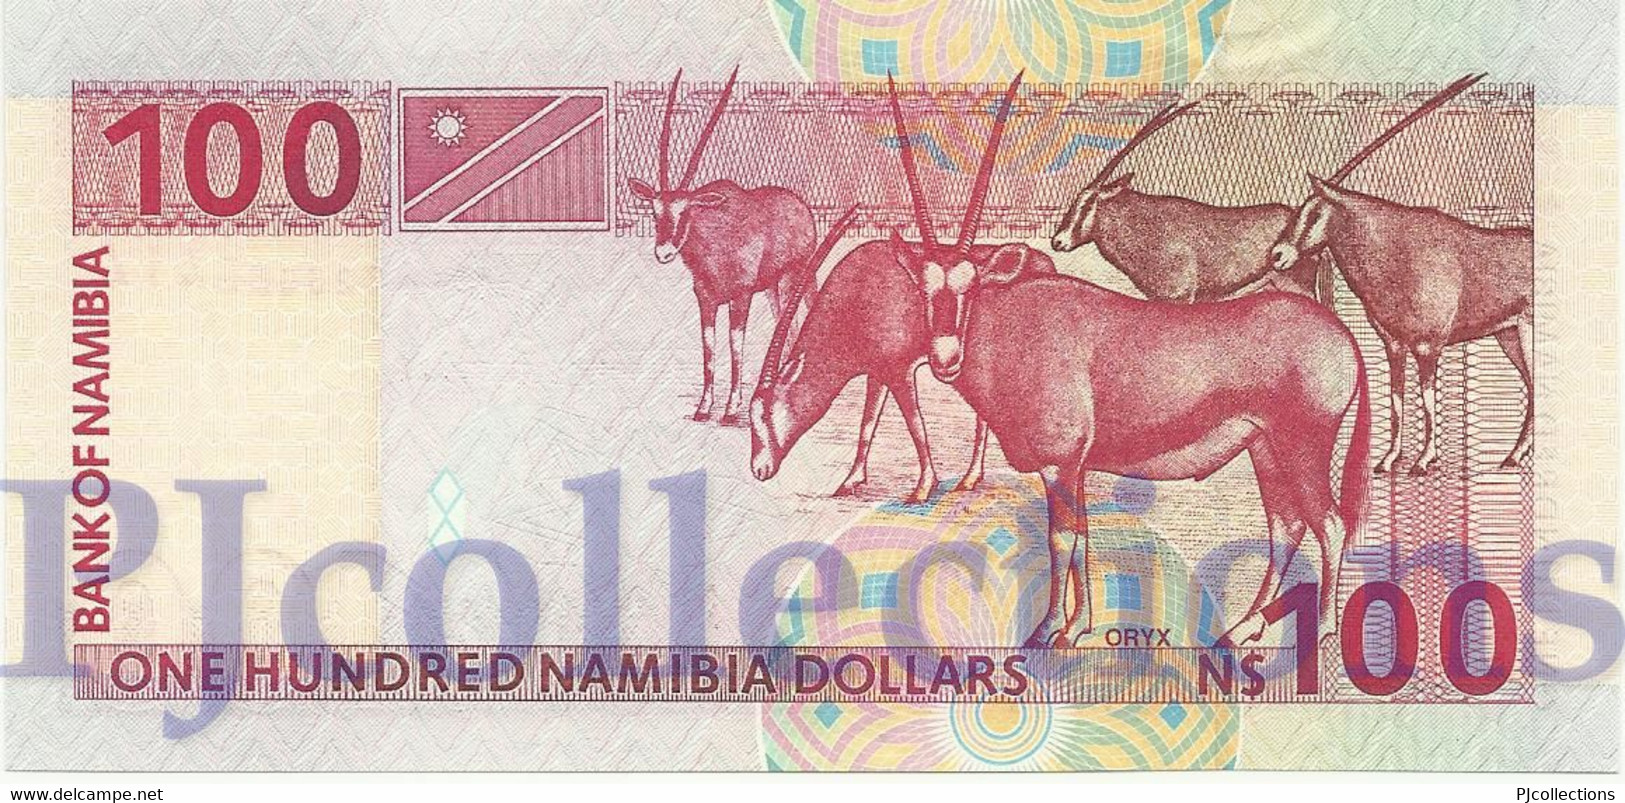 NAMIBIA 100 DOLLARS 1999 PICK 9b UNC - Namibia